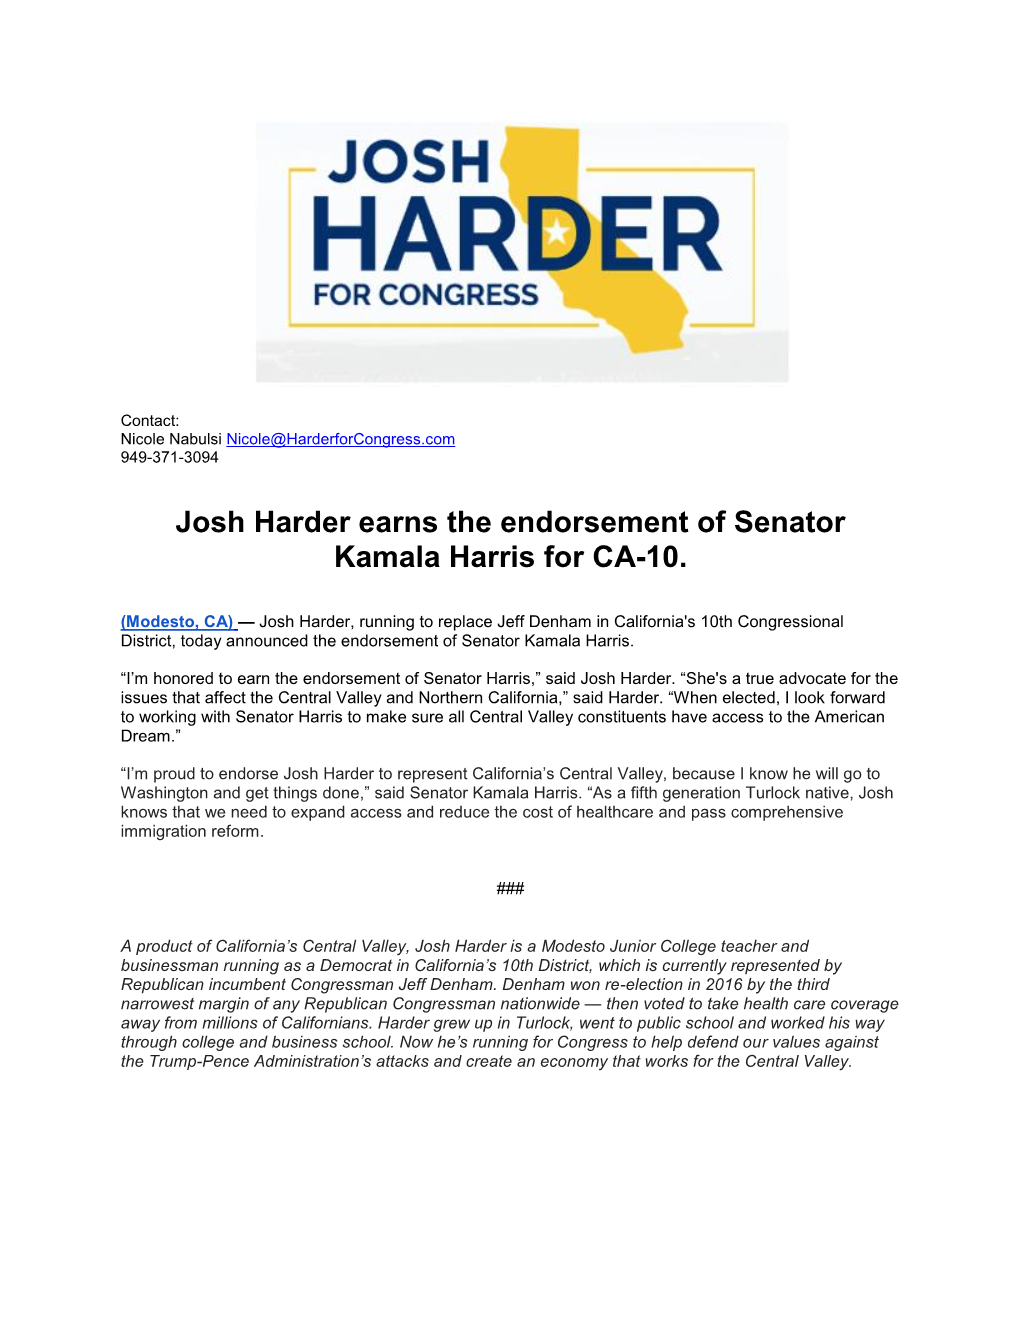 Josh Harder Earns the Endorsement of Senator Kamala Harris for CA-10